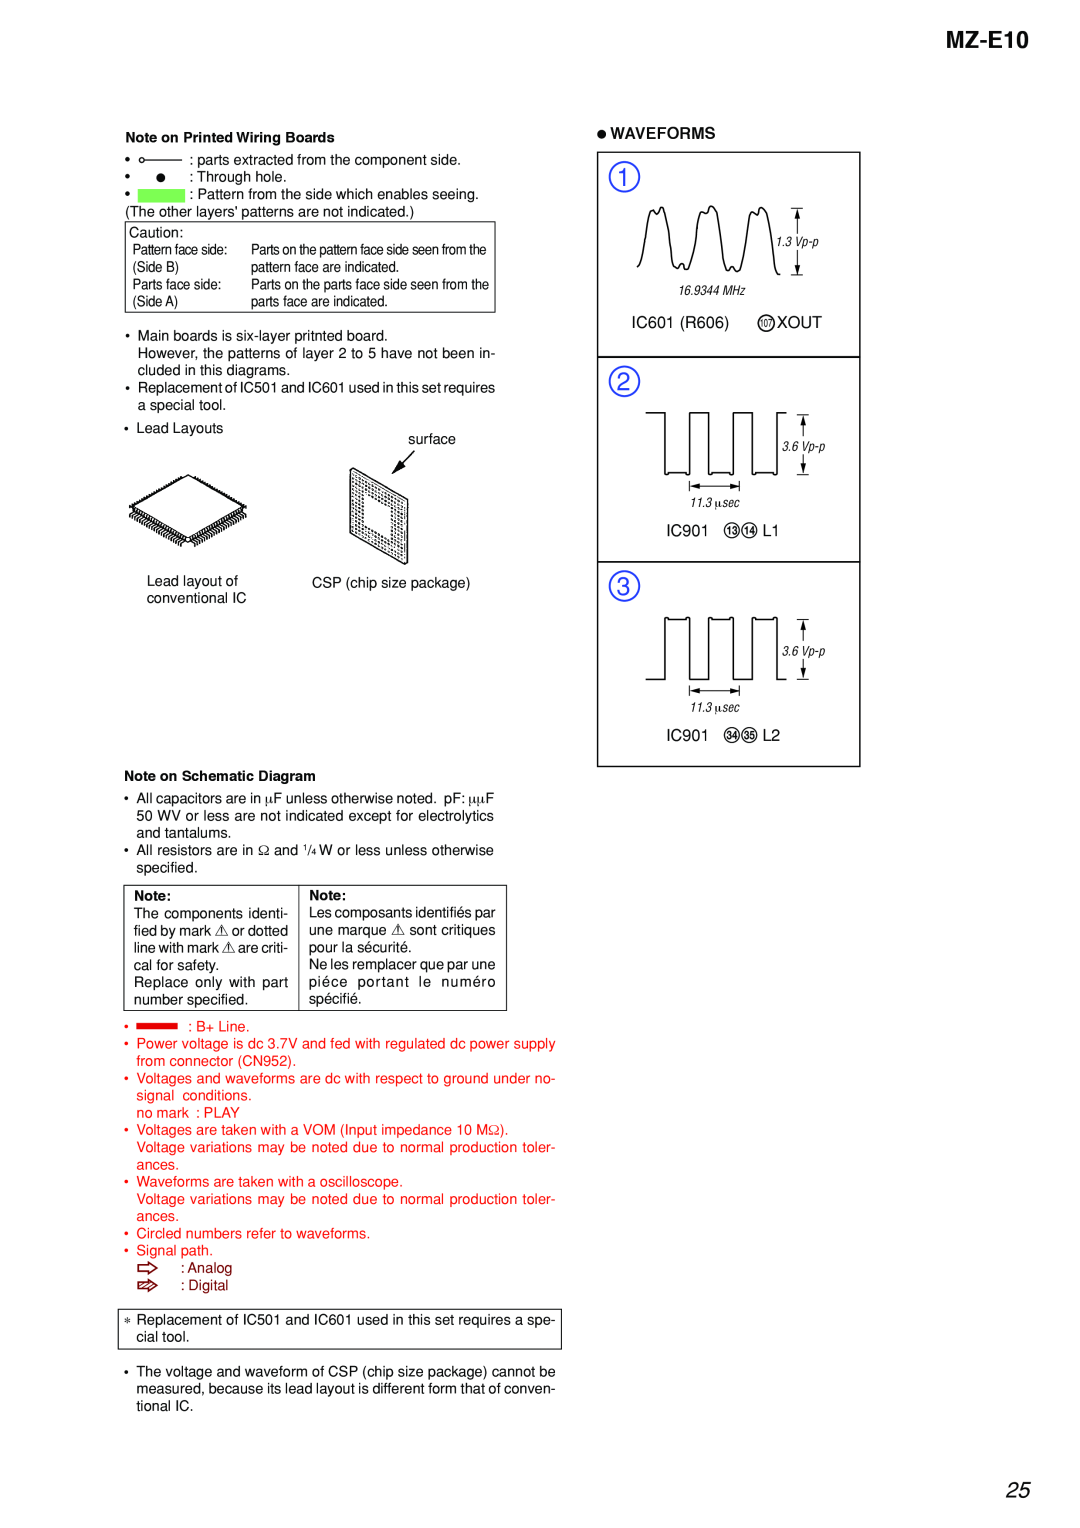 Sony MZ-E10 service manual rWAVEFORMS, IC601 R606 107 XOUT, IC901 qdqf L1, IC901 efeg L2, J Digital 